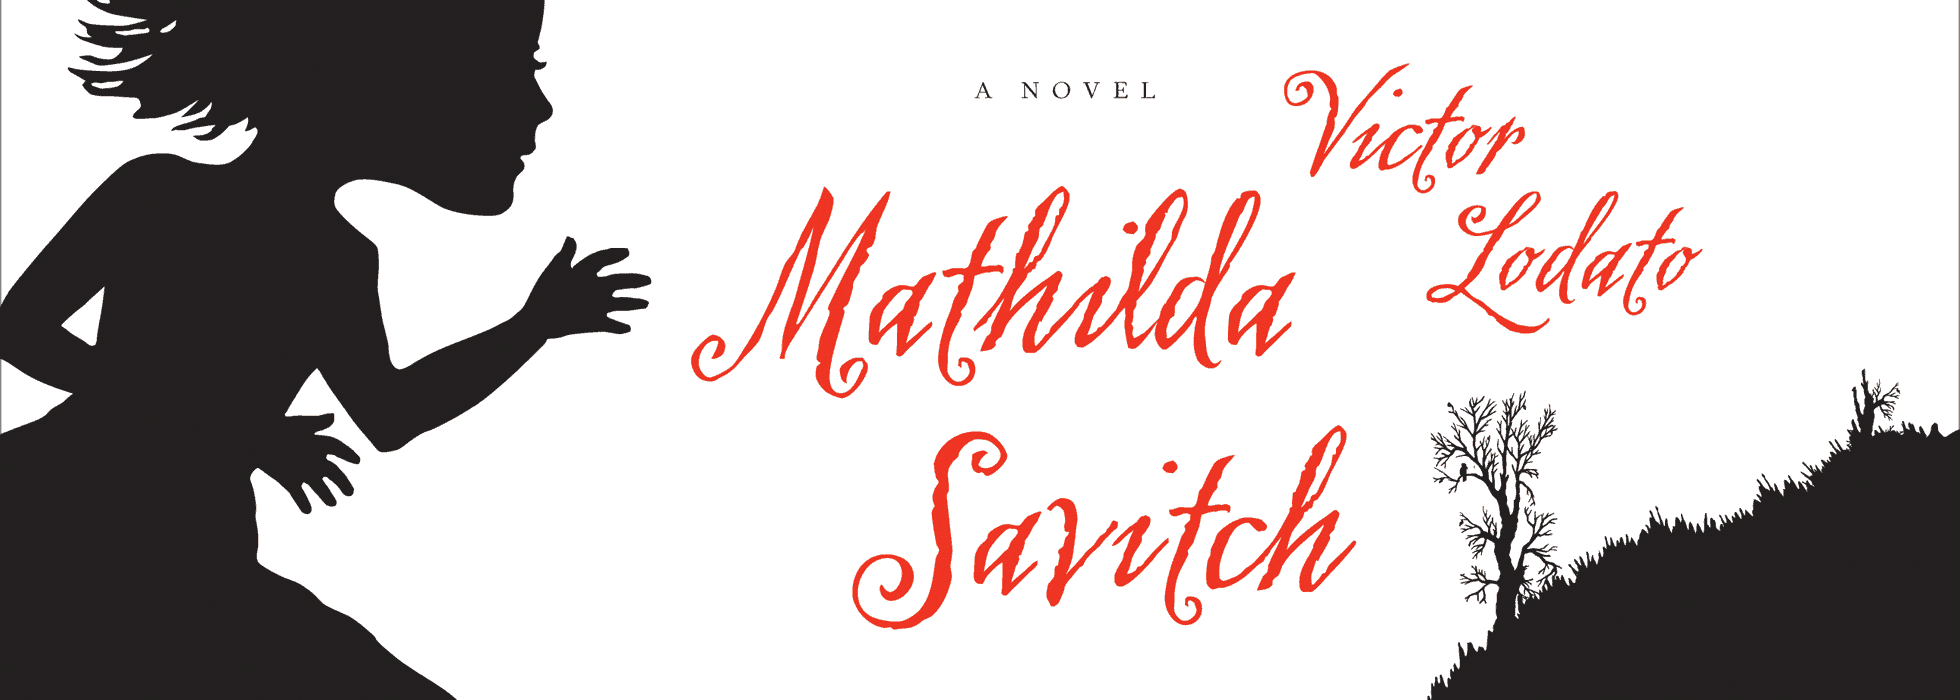 Mathilda Savitch由Victor Lodato